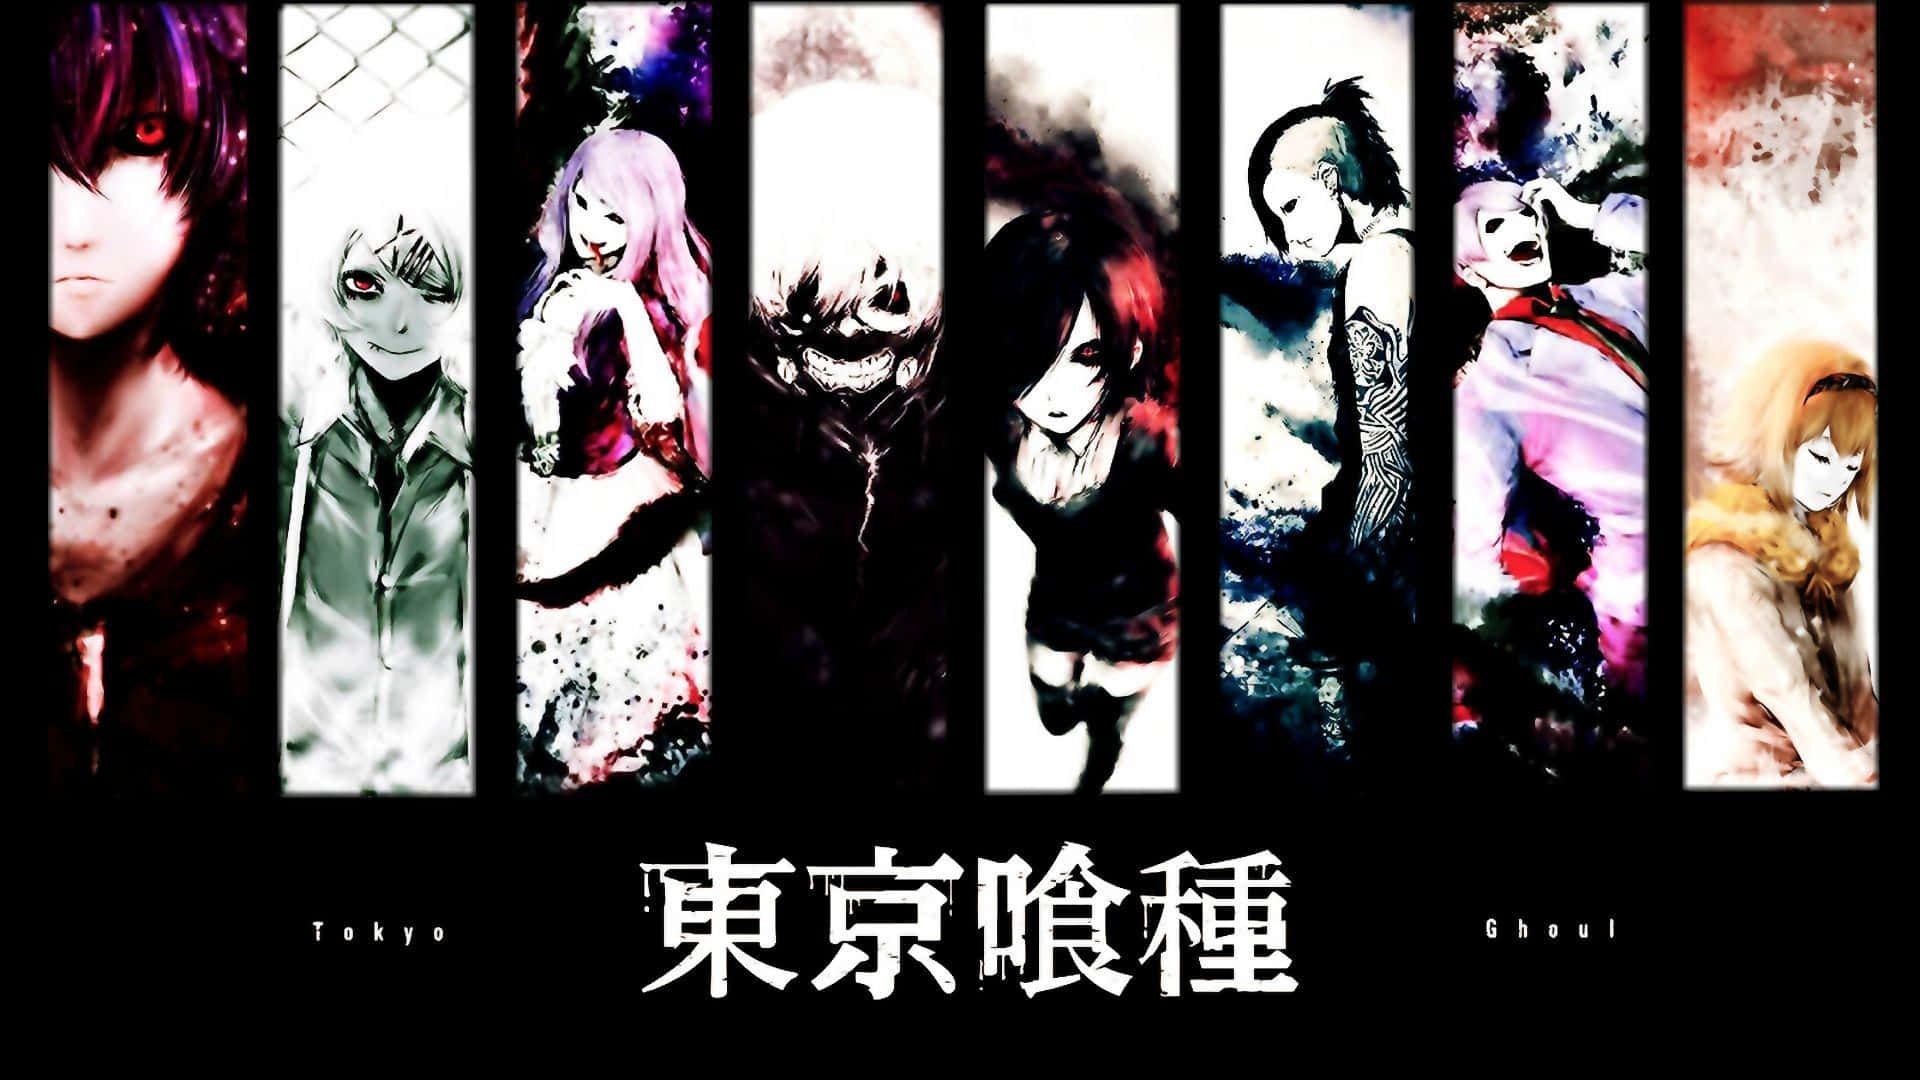 Uta from Tokyo Ghoul Anime Series Wallpaper